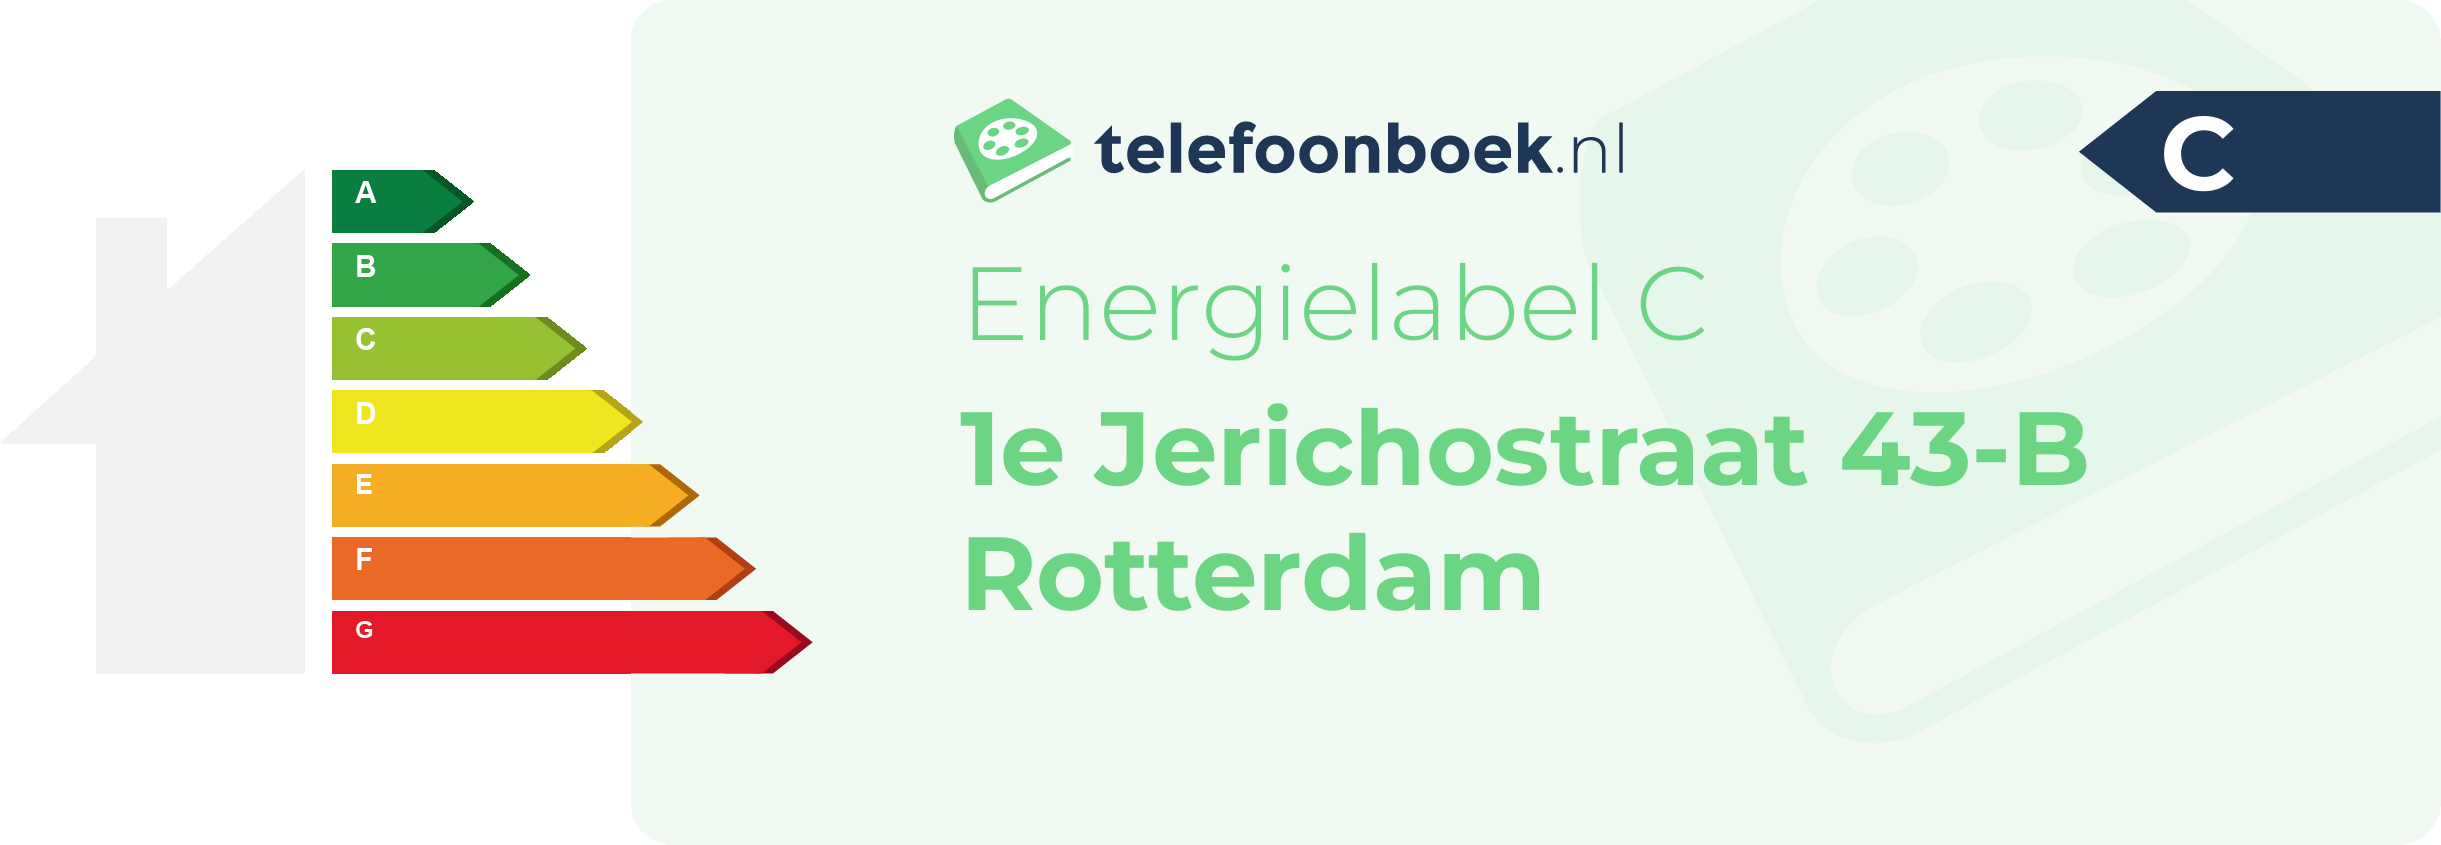 Energielabel 1e Jerichostraat 43-B Rotterdam